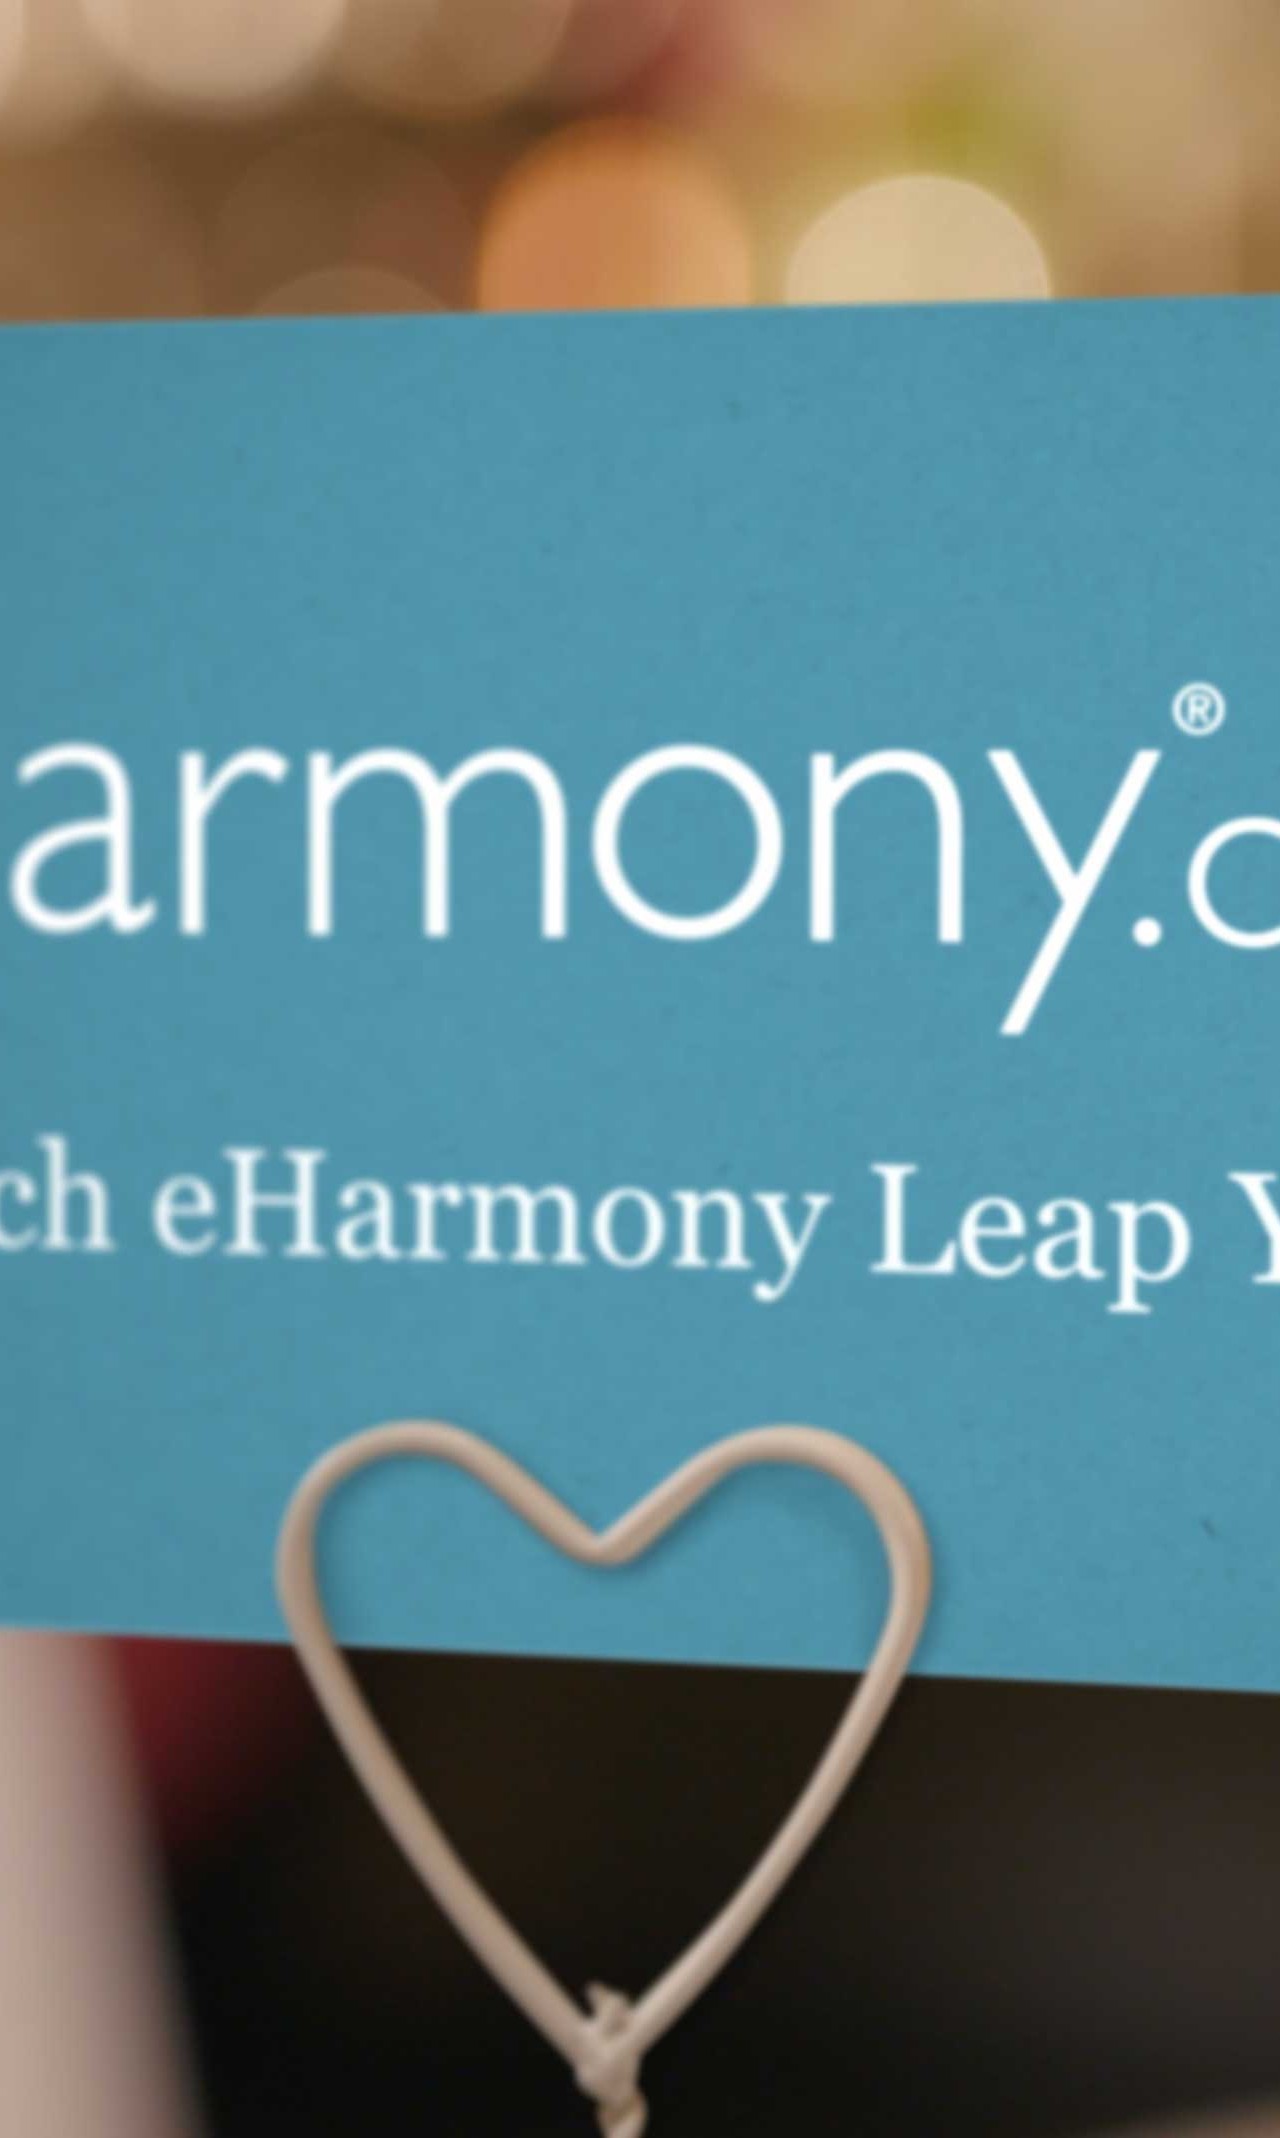 eHarmony logo on cardboard